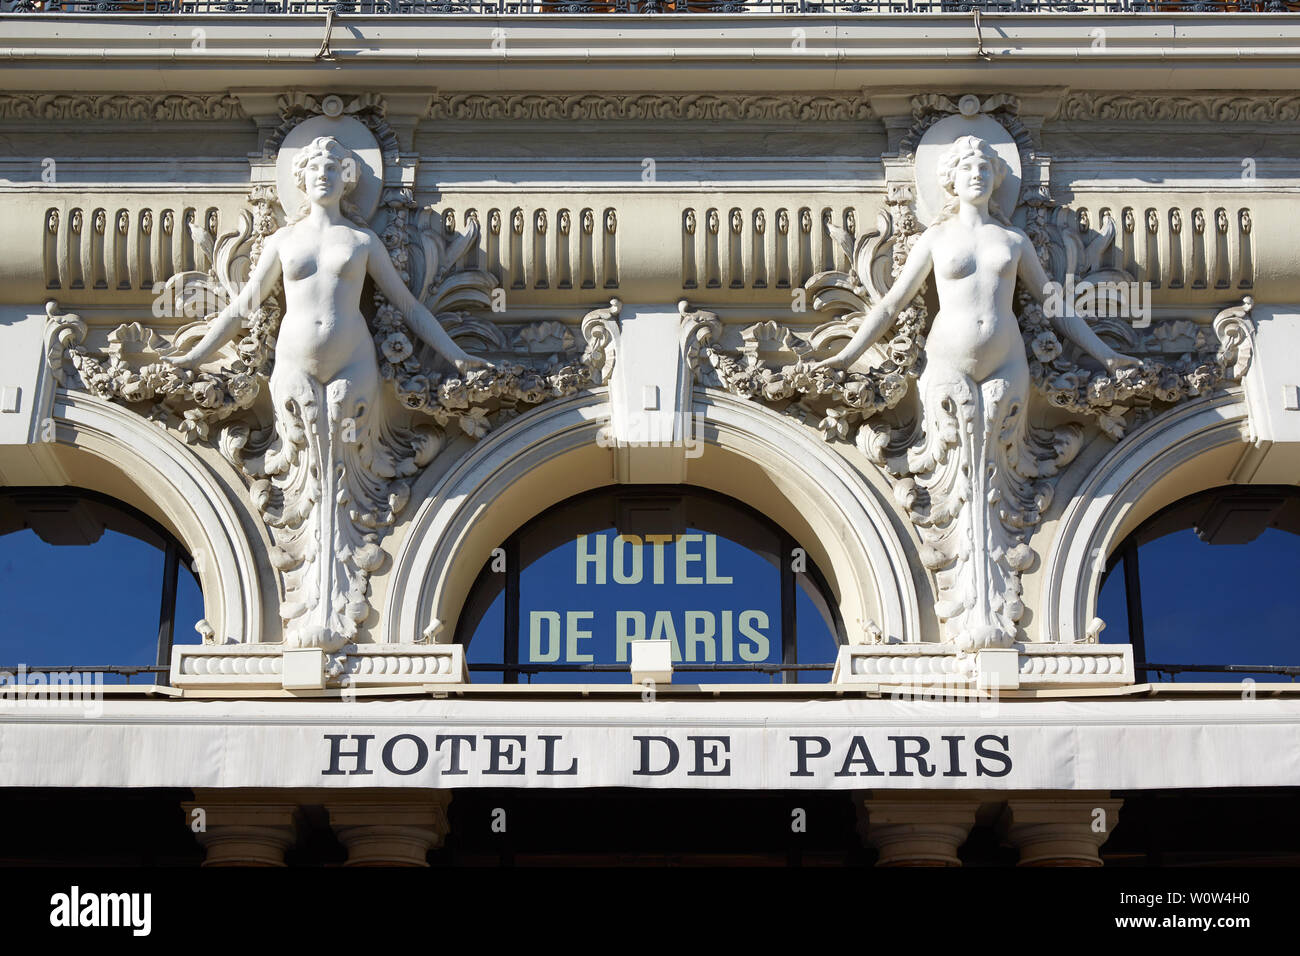 MONTE CARLO, MONACO - AUGUST 21, 2016: Hotel de Paris, luxury hotel building, sculpures detail and sign in a summer day in Monte Carlo, Monaco. Stock Photo